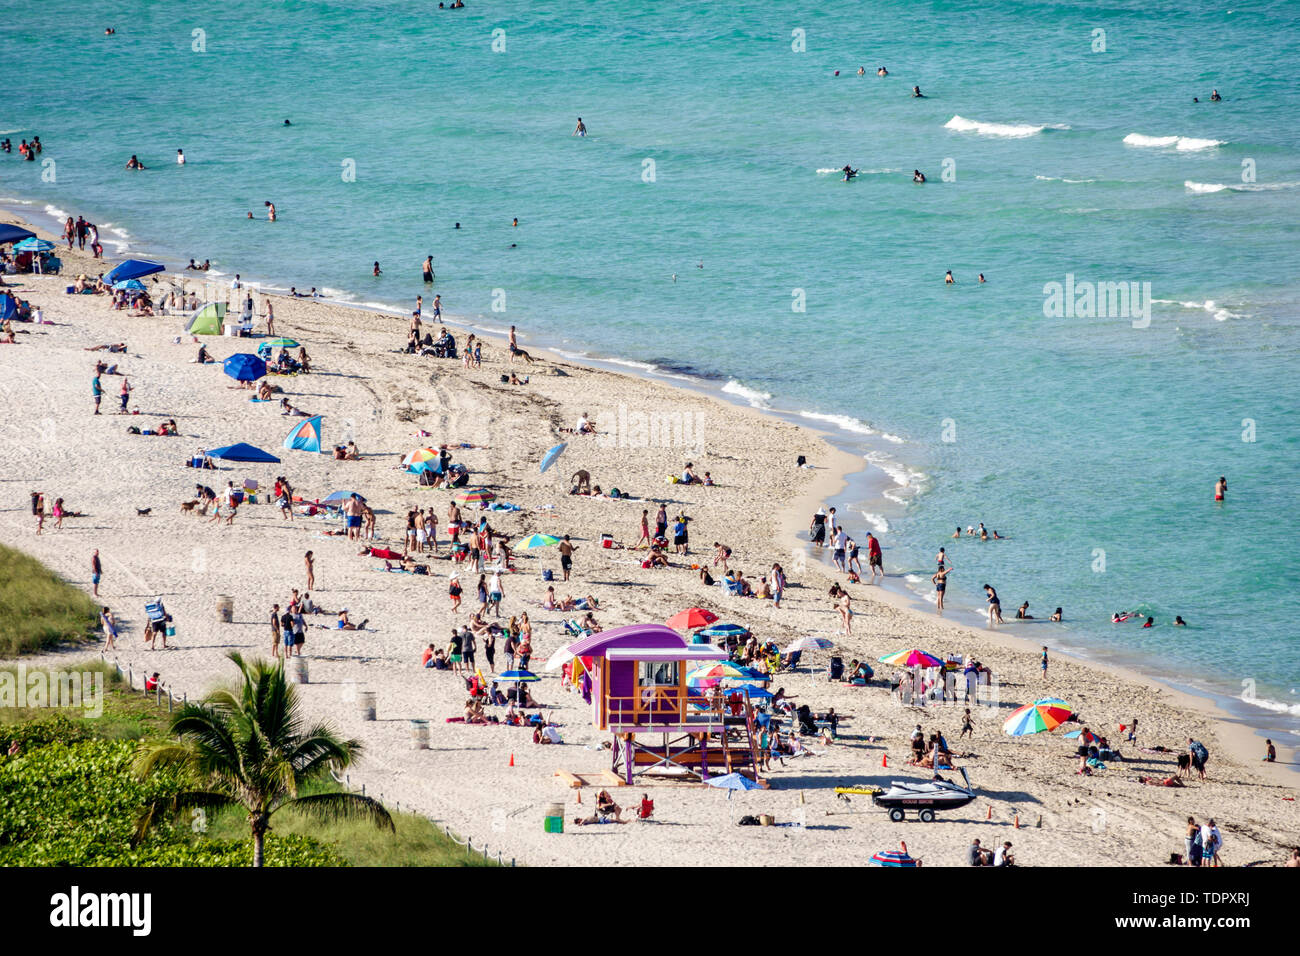 Miami Beach Florida,North Beach,North Shore Open Space Park,Atlantic Ocean,sunbathers,public beach,sand,umbrellas,shoreline,lifeguard tower station,cr Stock Photo